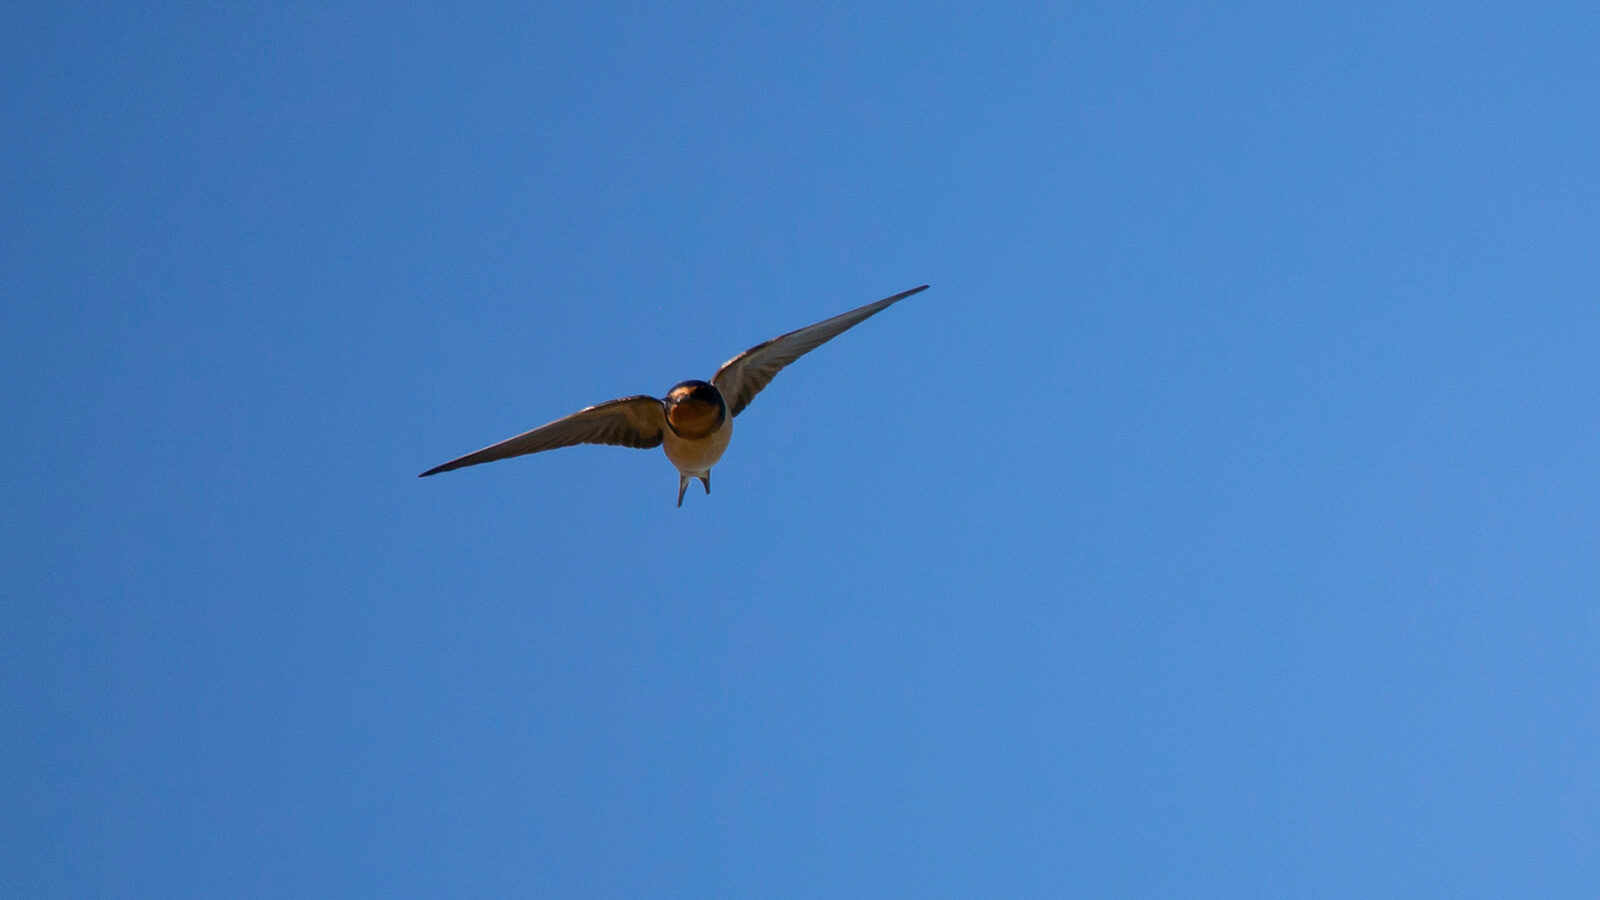 Barn swallow soaring through a blue sky